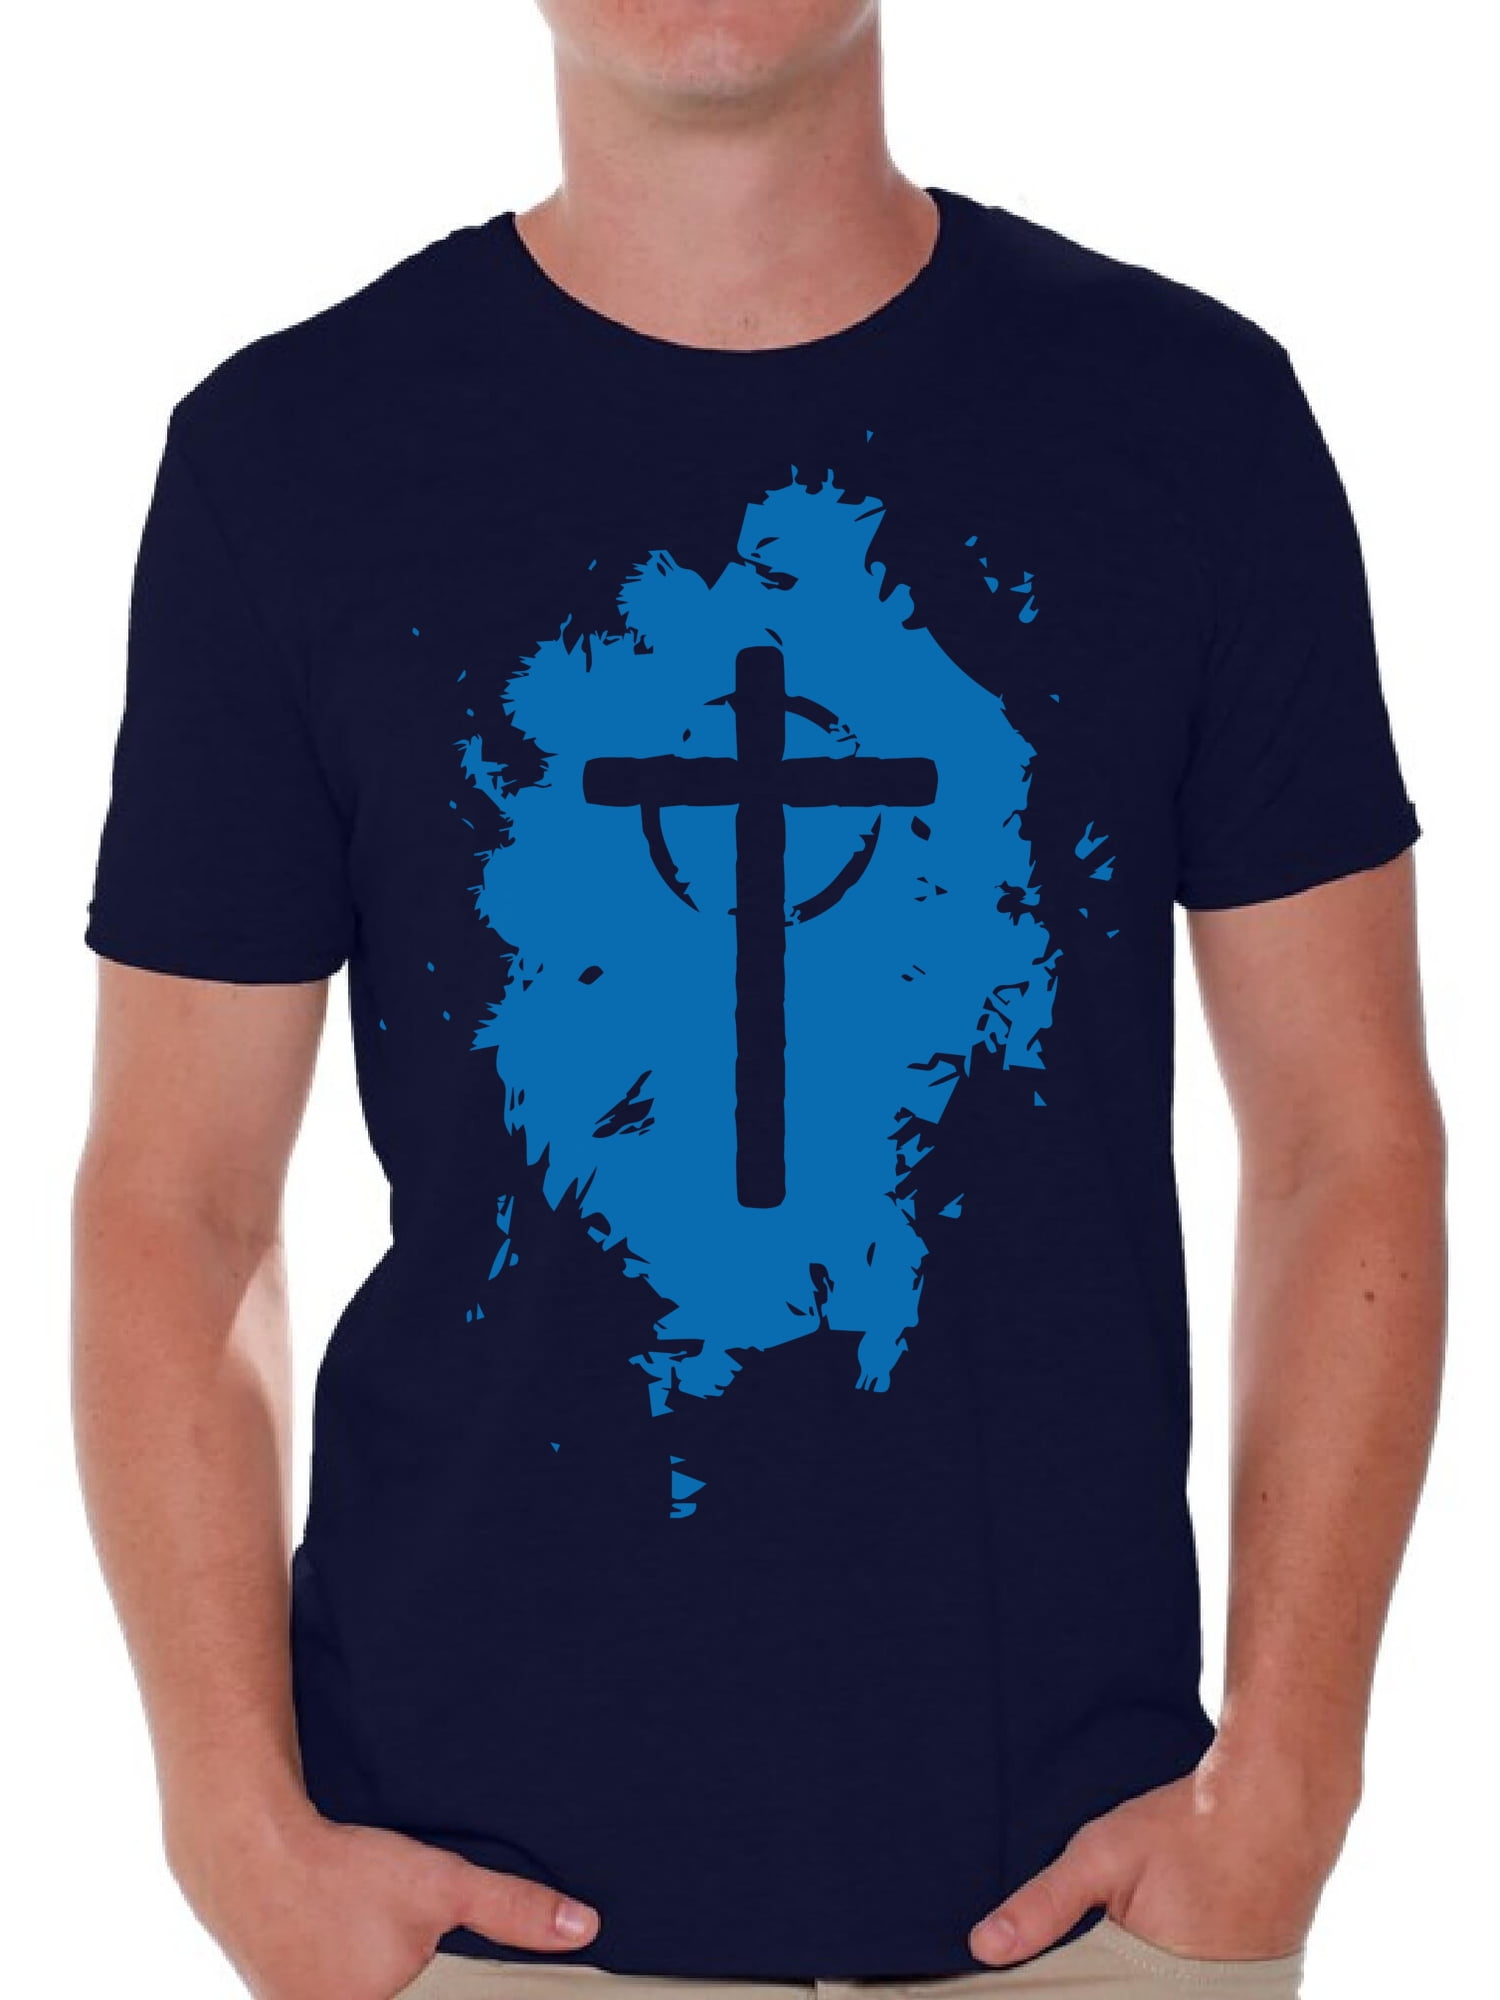 Awkward Styles - Awkward Styles Cross Shirt for Men Christian Mens ...